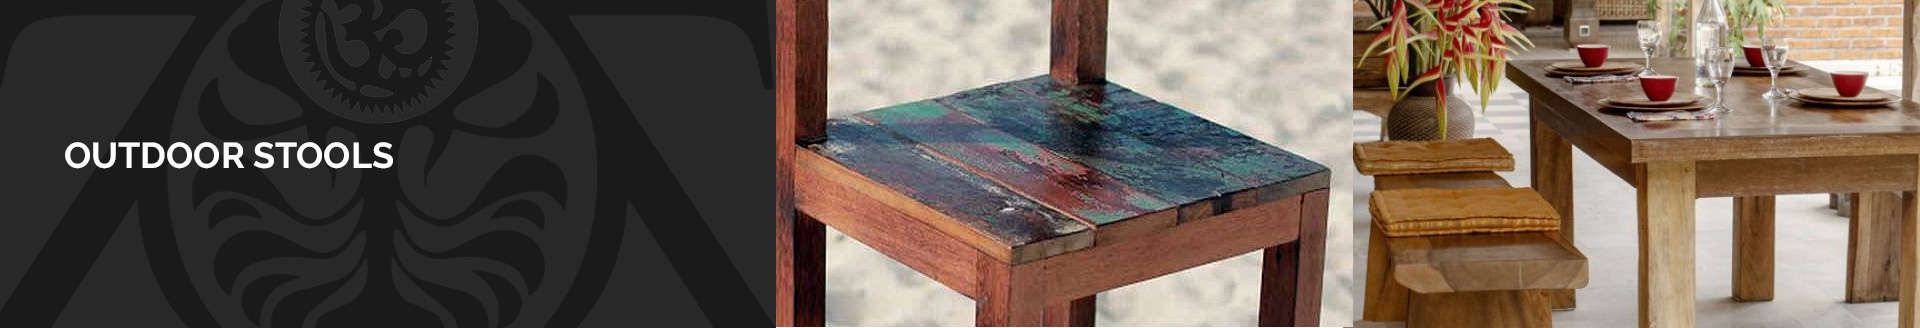 outdoor bar stools catalogue manufacturers indonesia exporters wholesalers suppliers bali java jepara zenddu